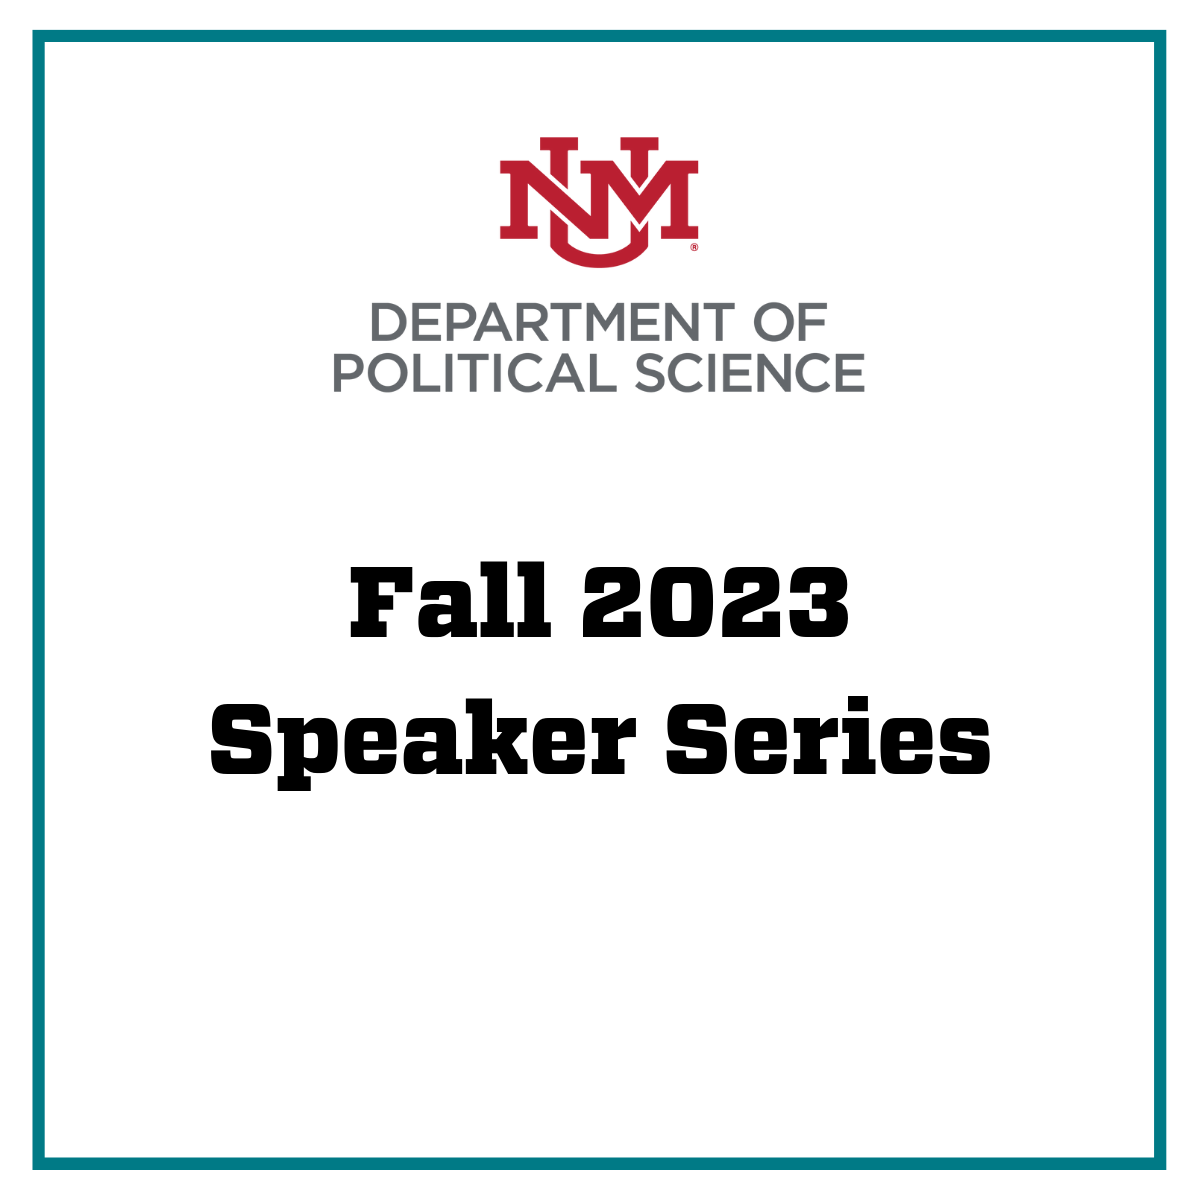 Fall 2023 Speaker Series Line Up Announced